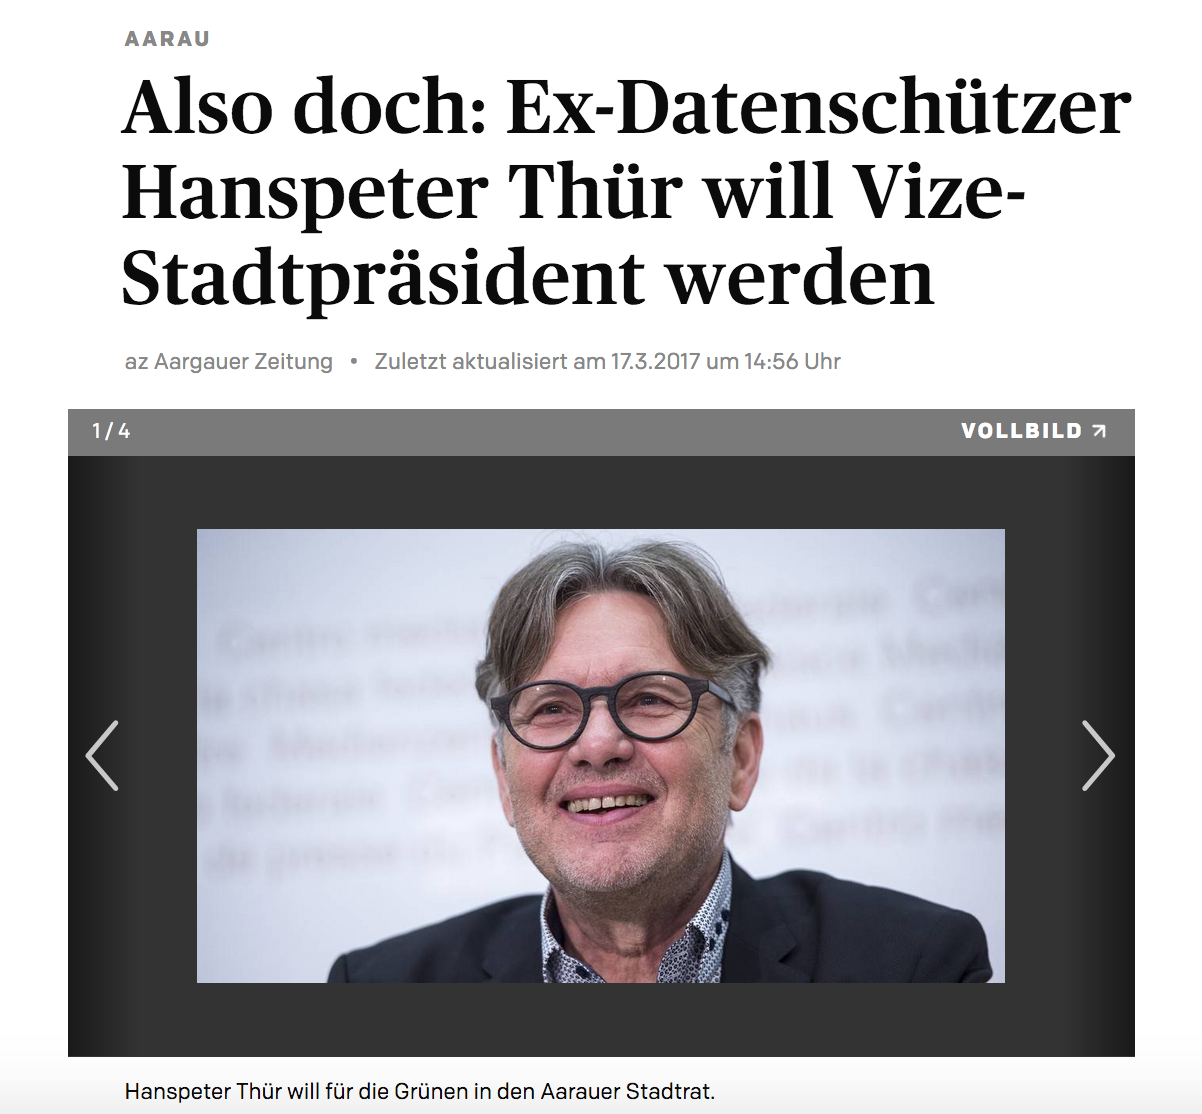 Also doch: Ex-Datenschützer Hanspeter Thür will Vize-Stadtpräsident werden - Hanspeter Thür